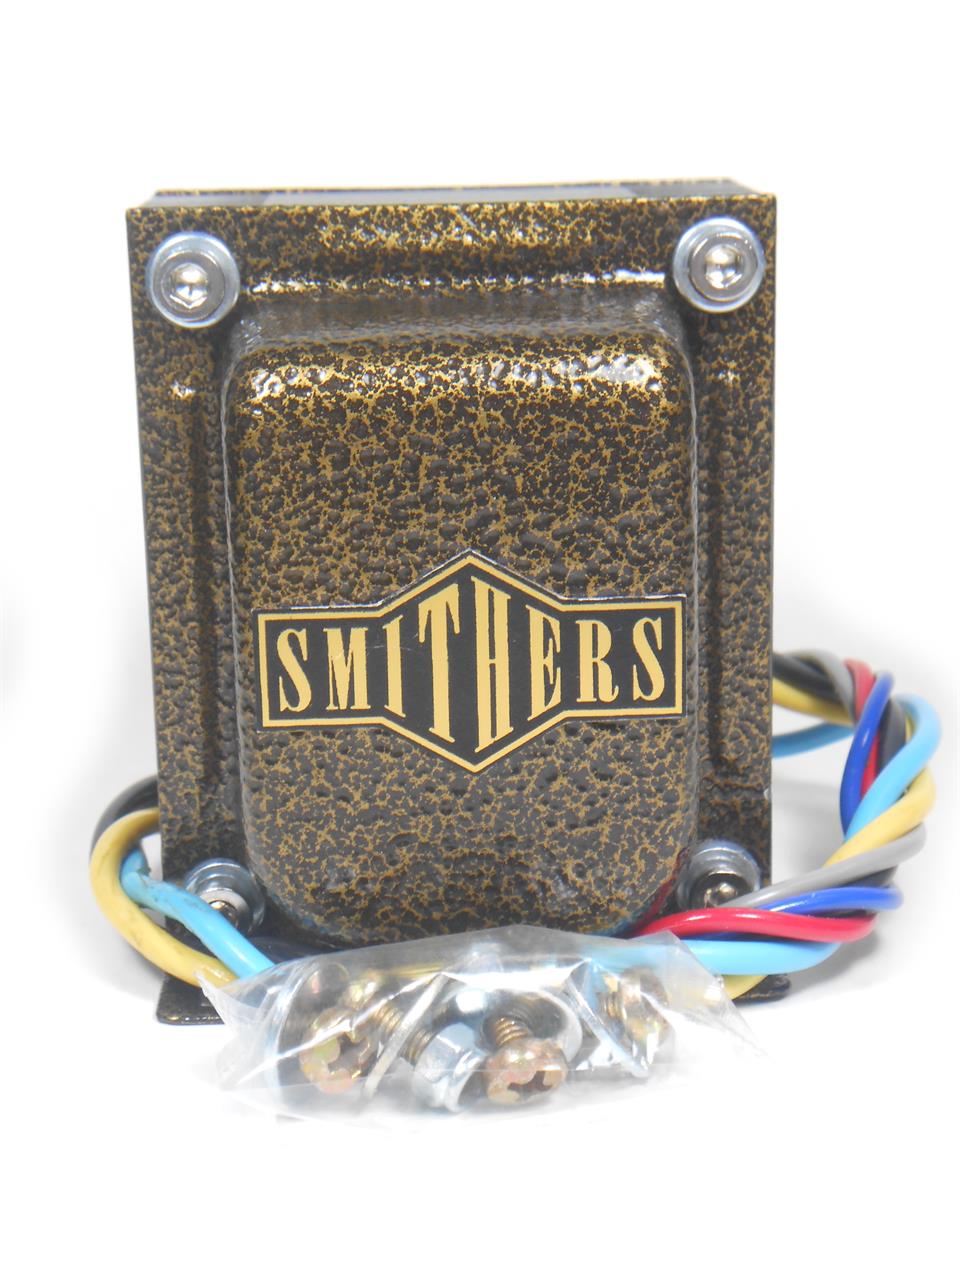 Transformadores e indutores Smithers Áudio - Transformador de saída 18W SM18 Smithers Áudio